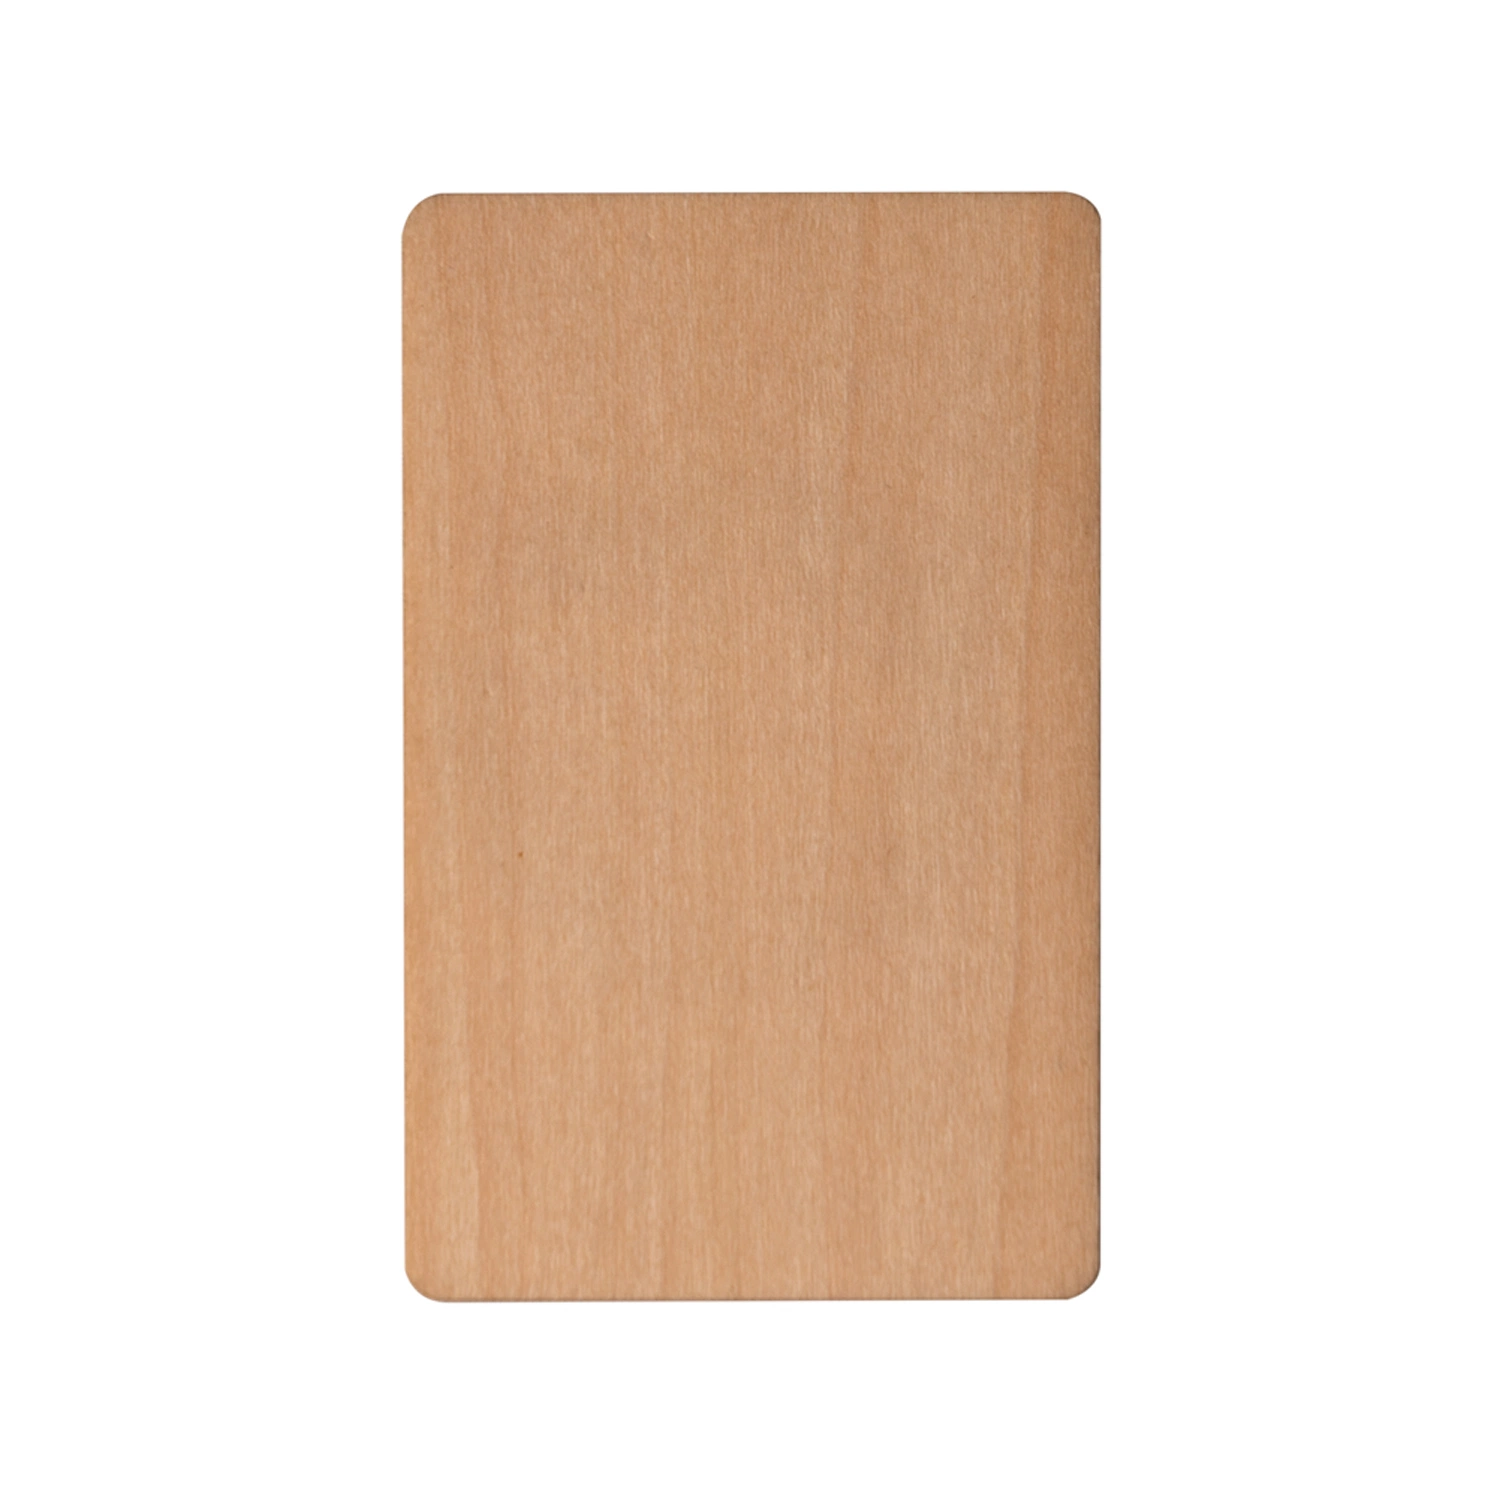 Wood NFC Card Wood RFID Card Wooden Hote Key Card